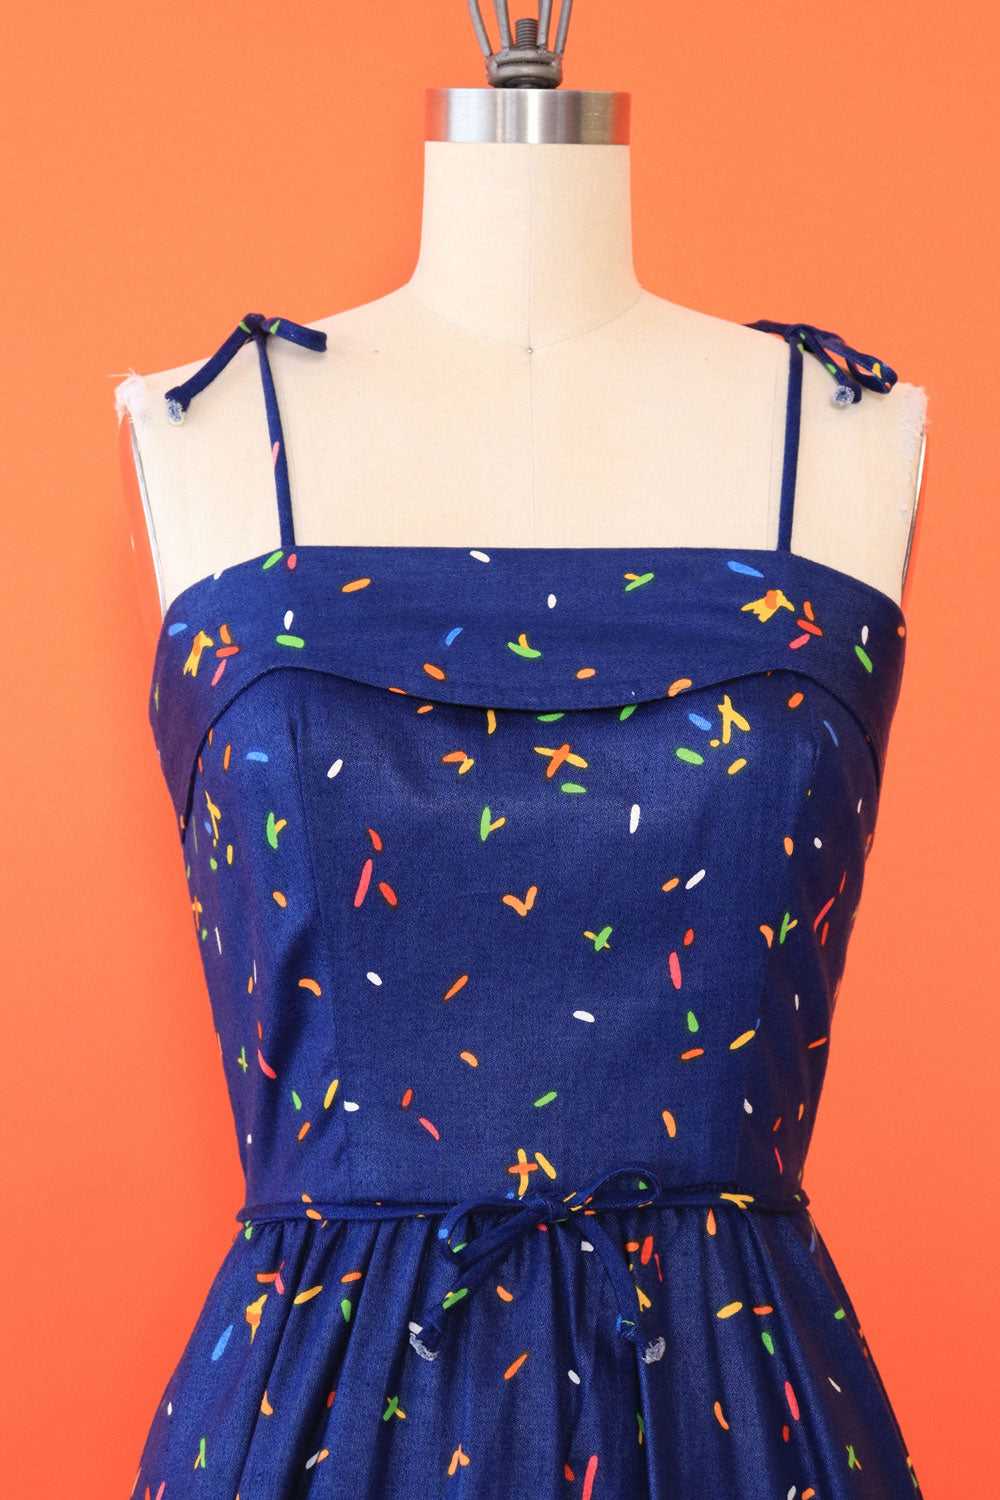 Blair Woolverton Cotton Confetti Dress XS - image 2